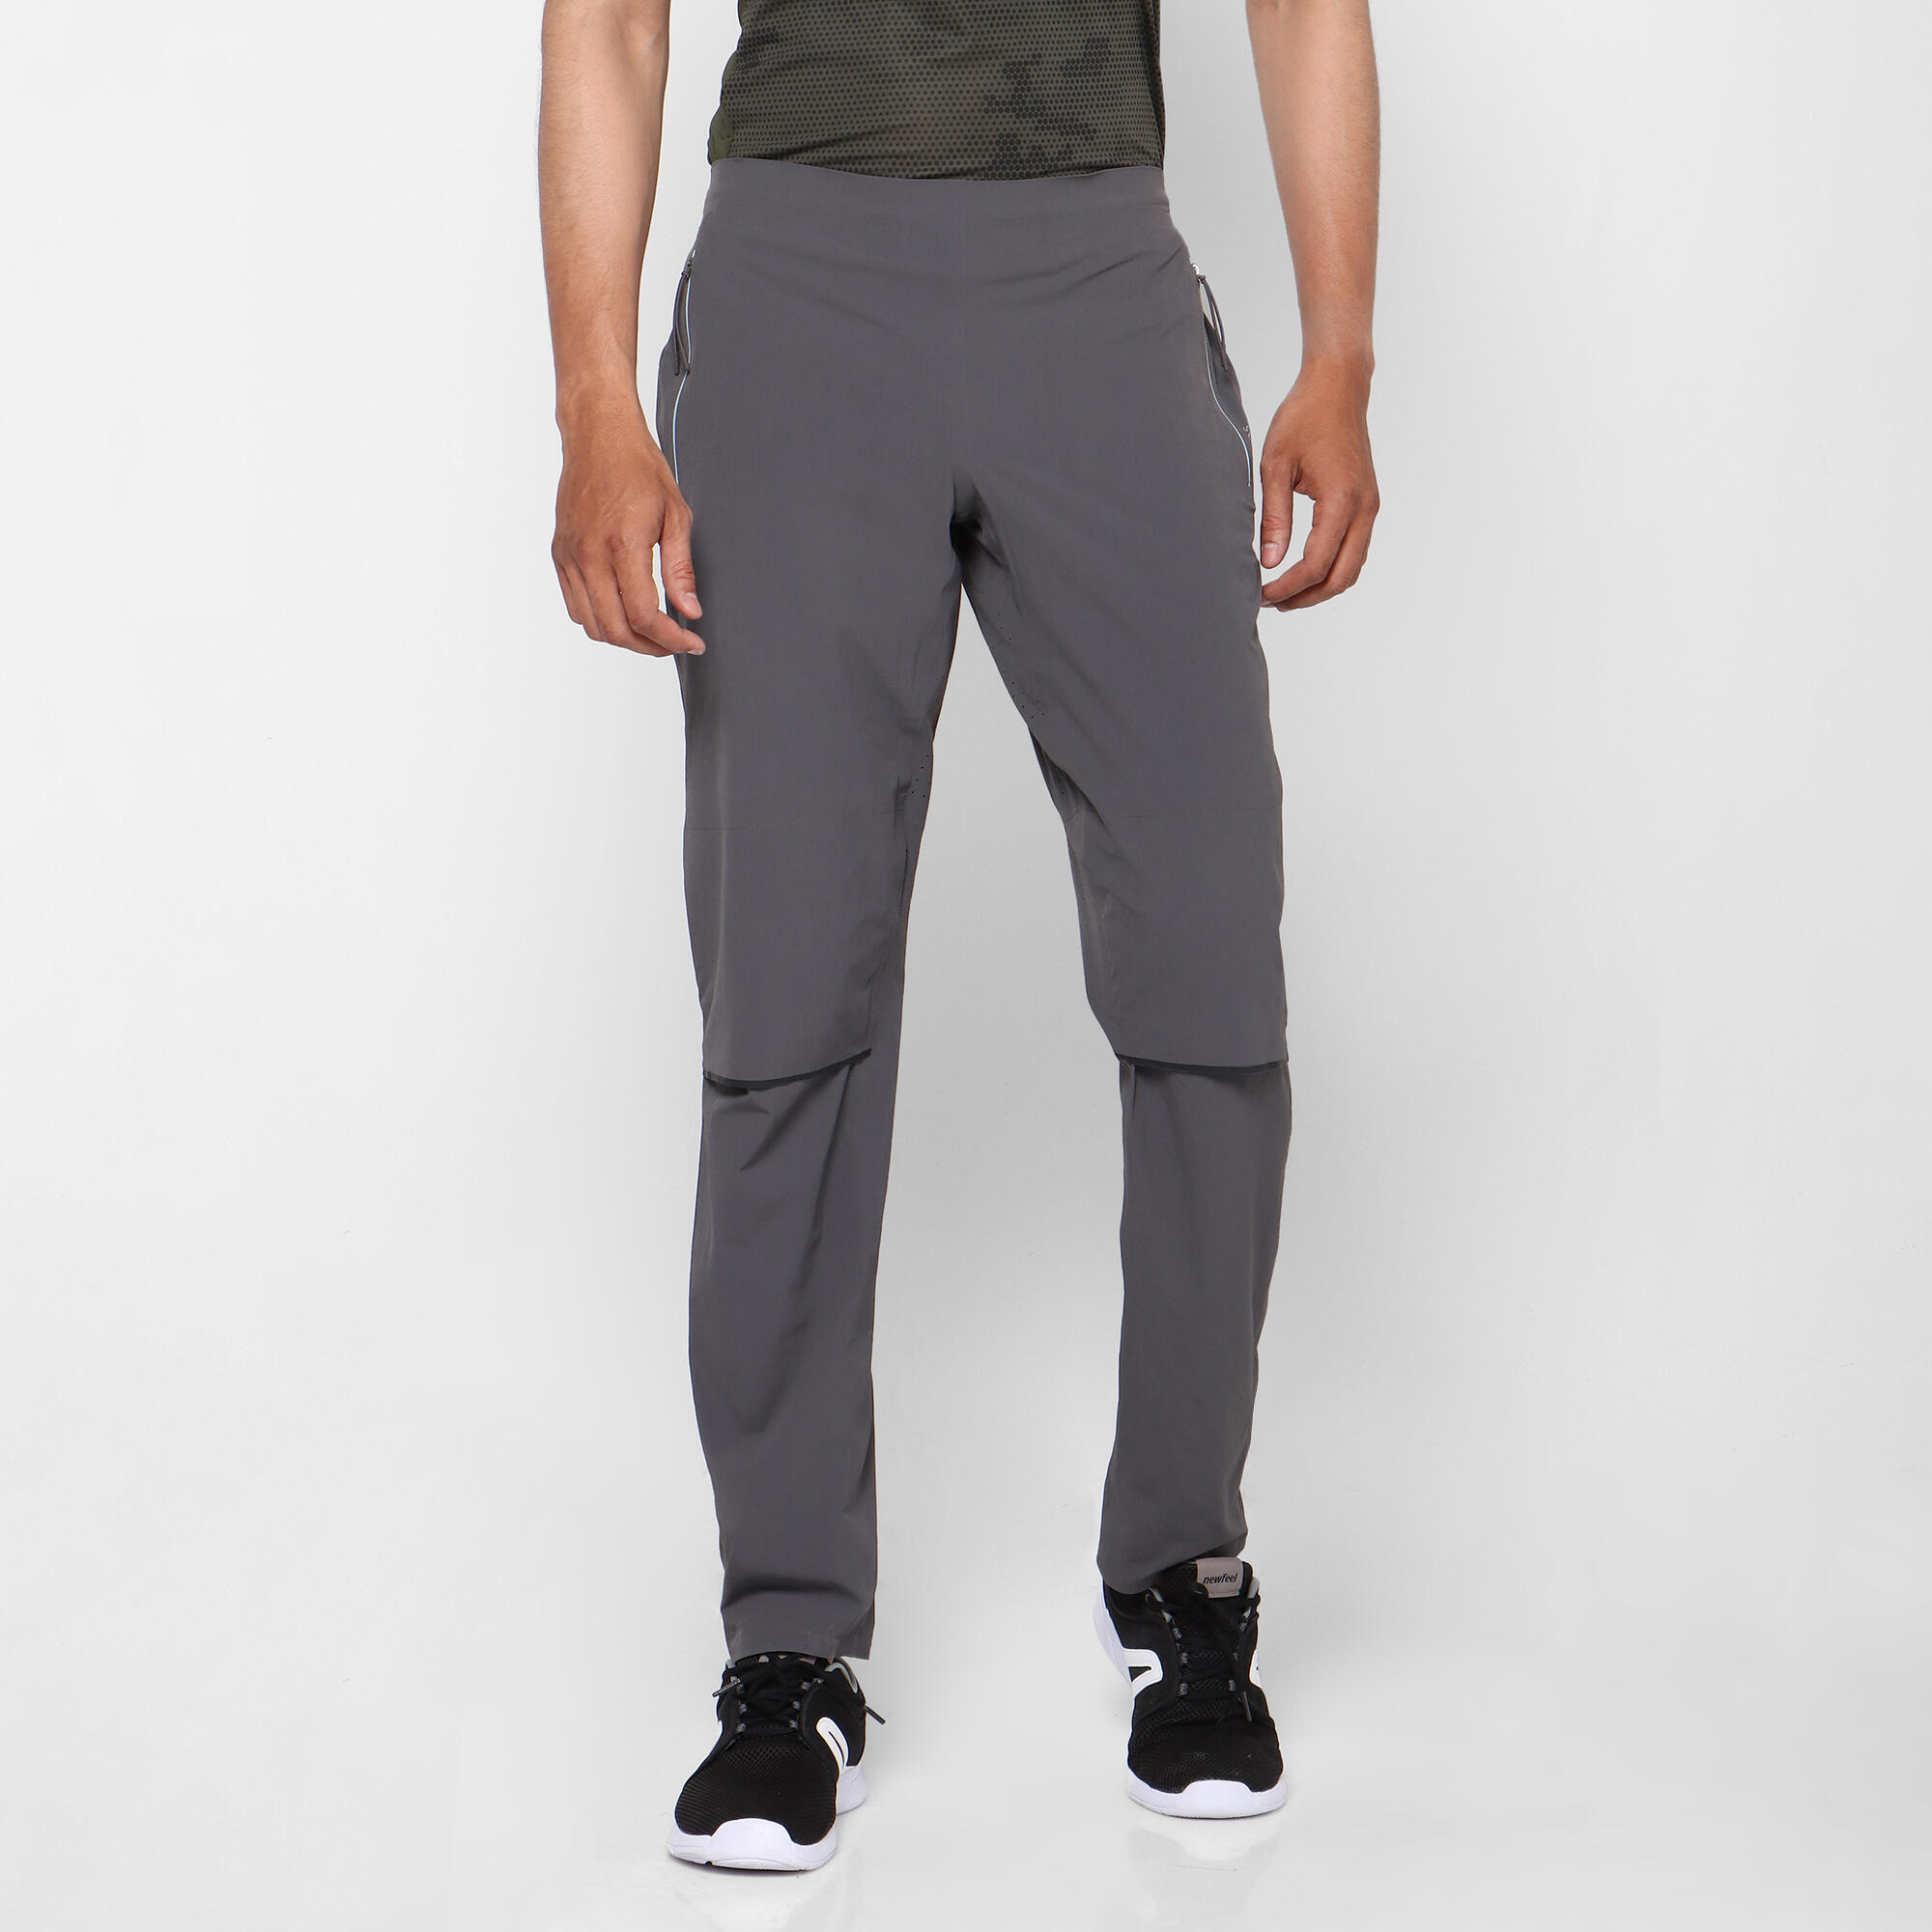 Buy Astellarie Mens Casual Pants MultiPockets Fashion Cargo Joggers Gym  Drawstring Long Pants Black3234 Inch at Amazonin